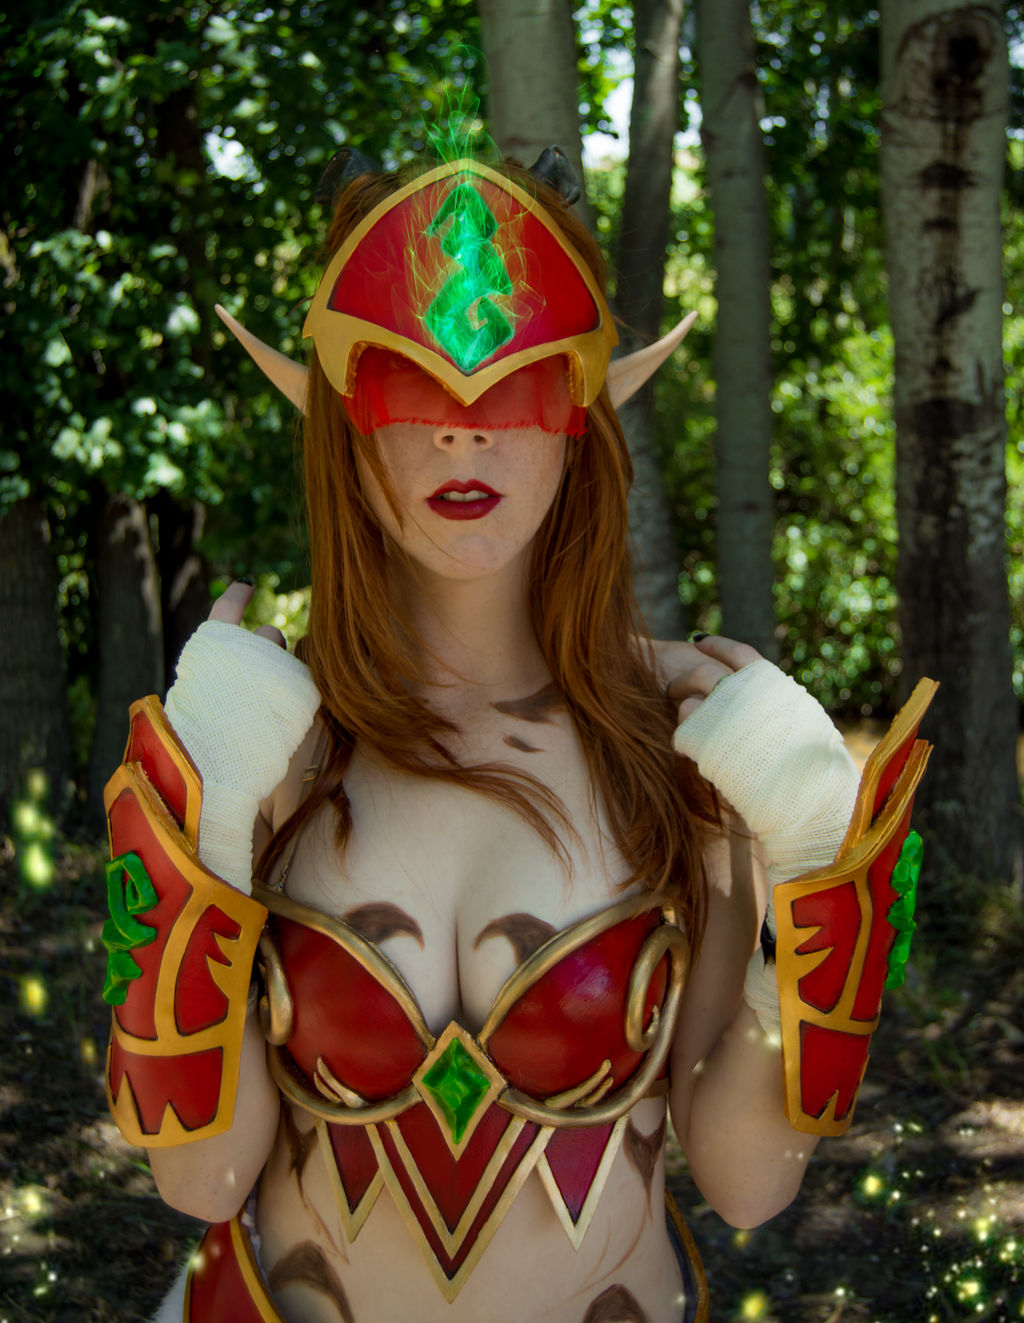 Blood Elf Demon Hunter from World of Warcraft